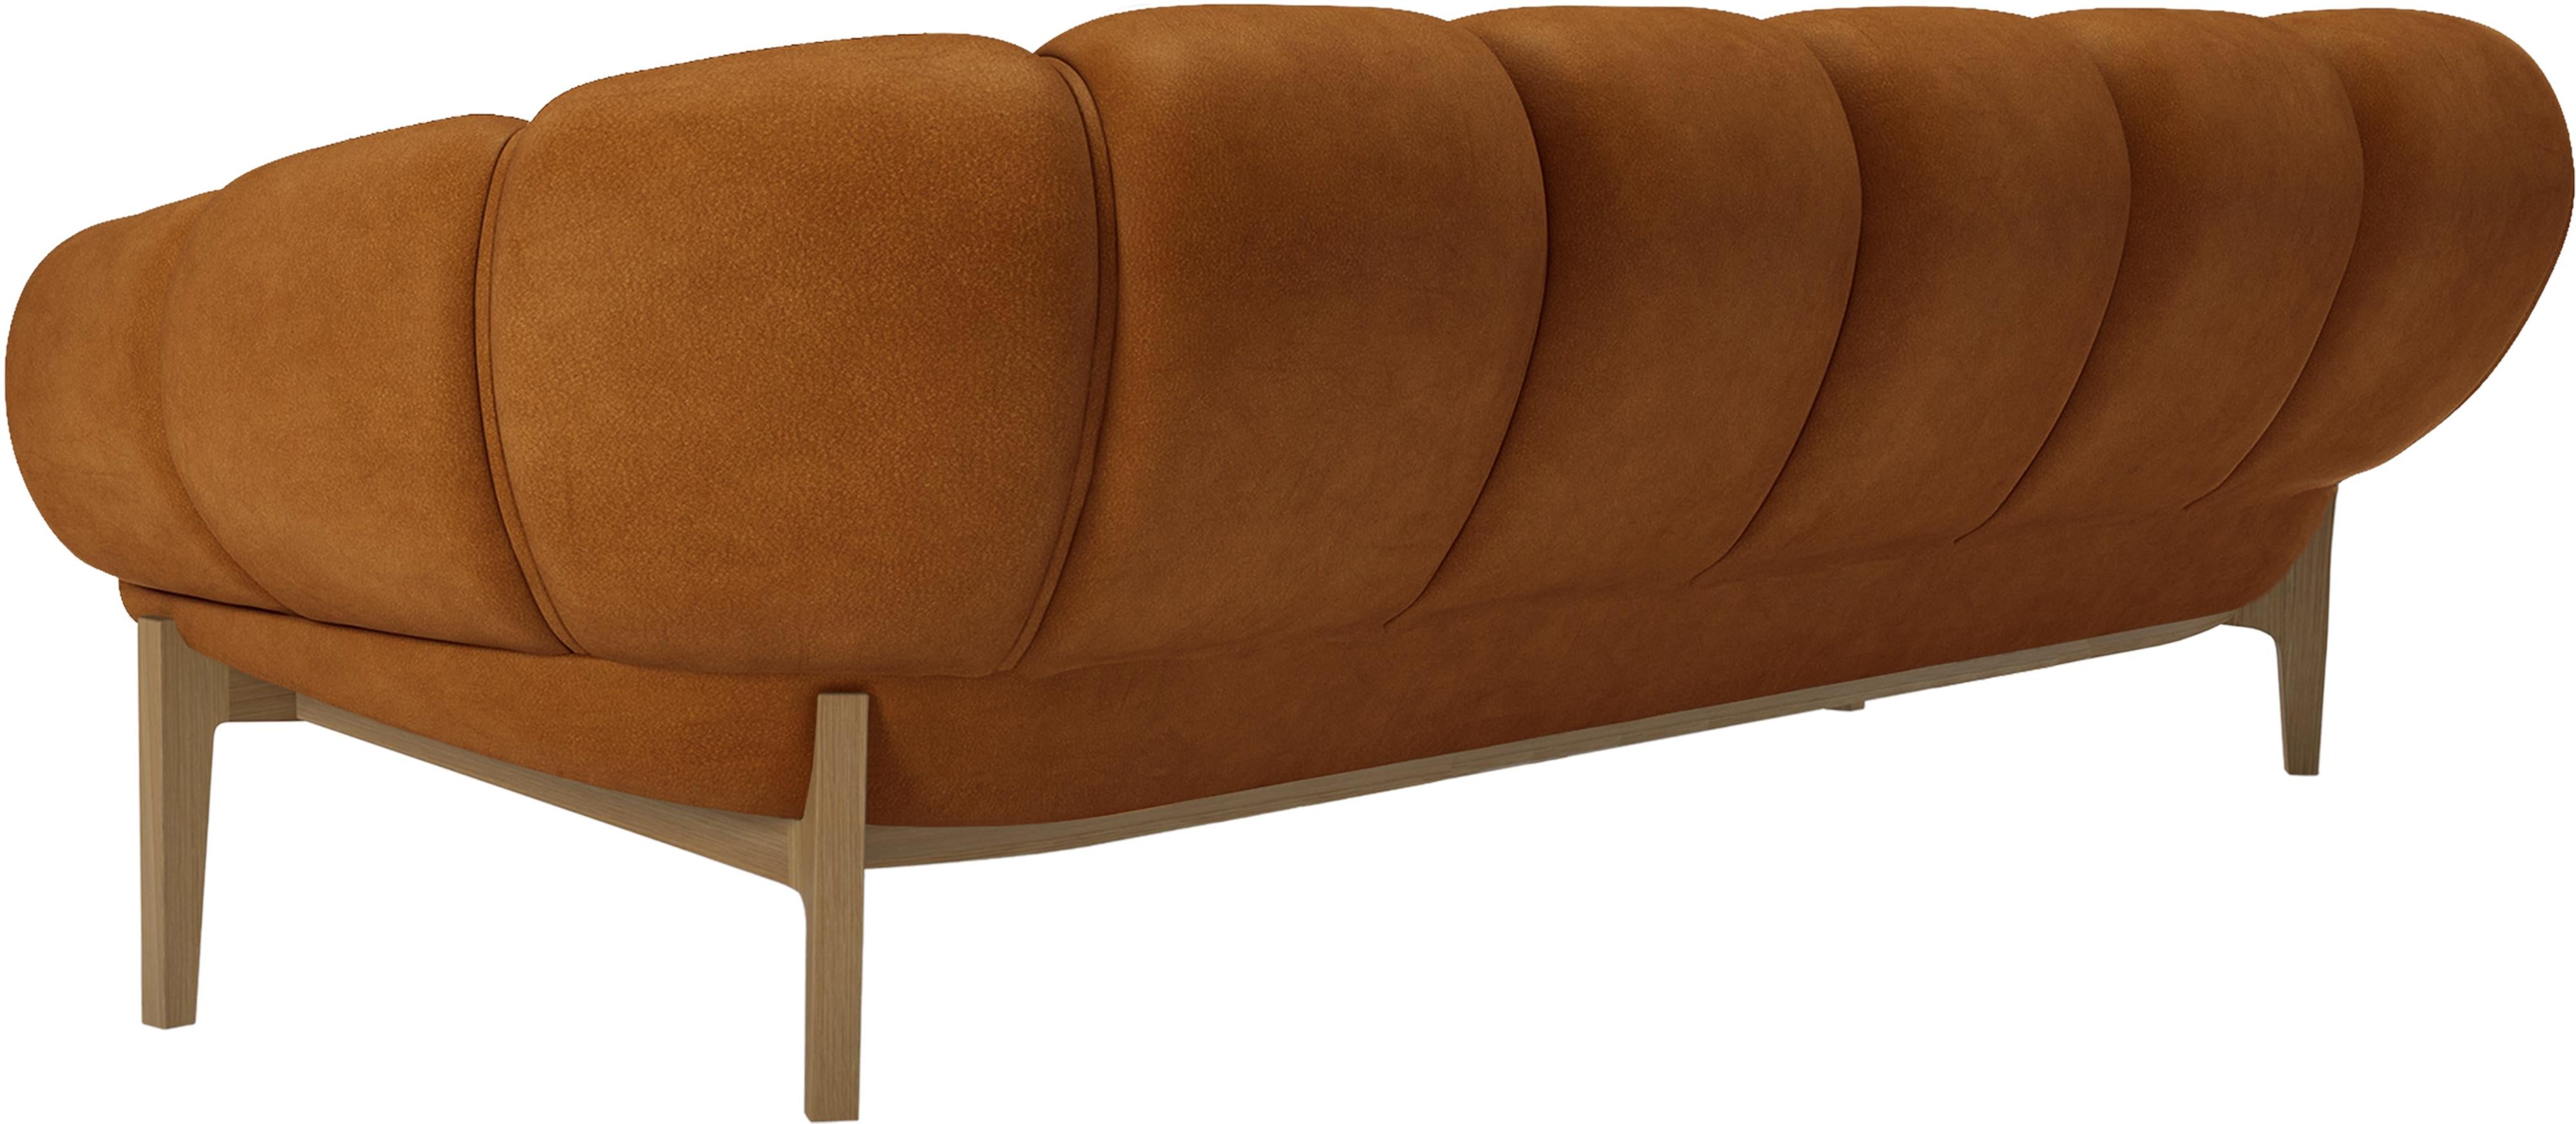 Mid-Century Modern Leather 'Croissant' Sofa by Illum Wikkelsø for Gubi with Oak Legs For Sale